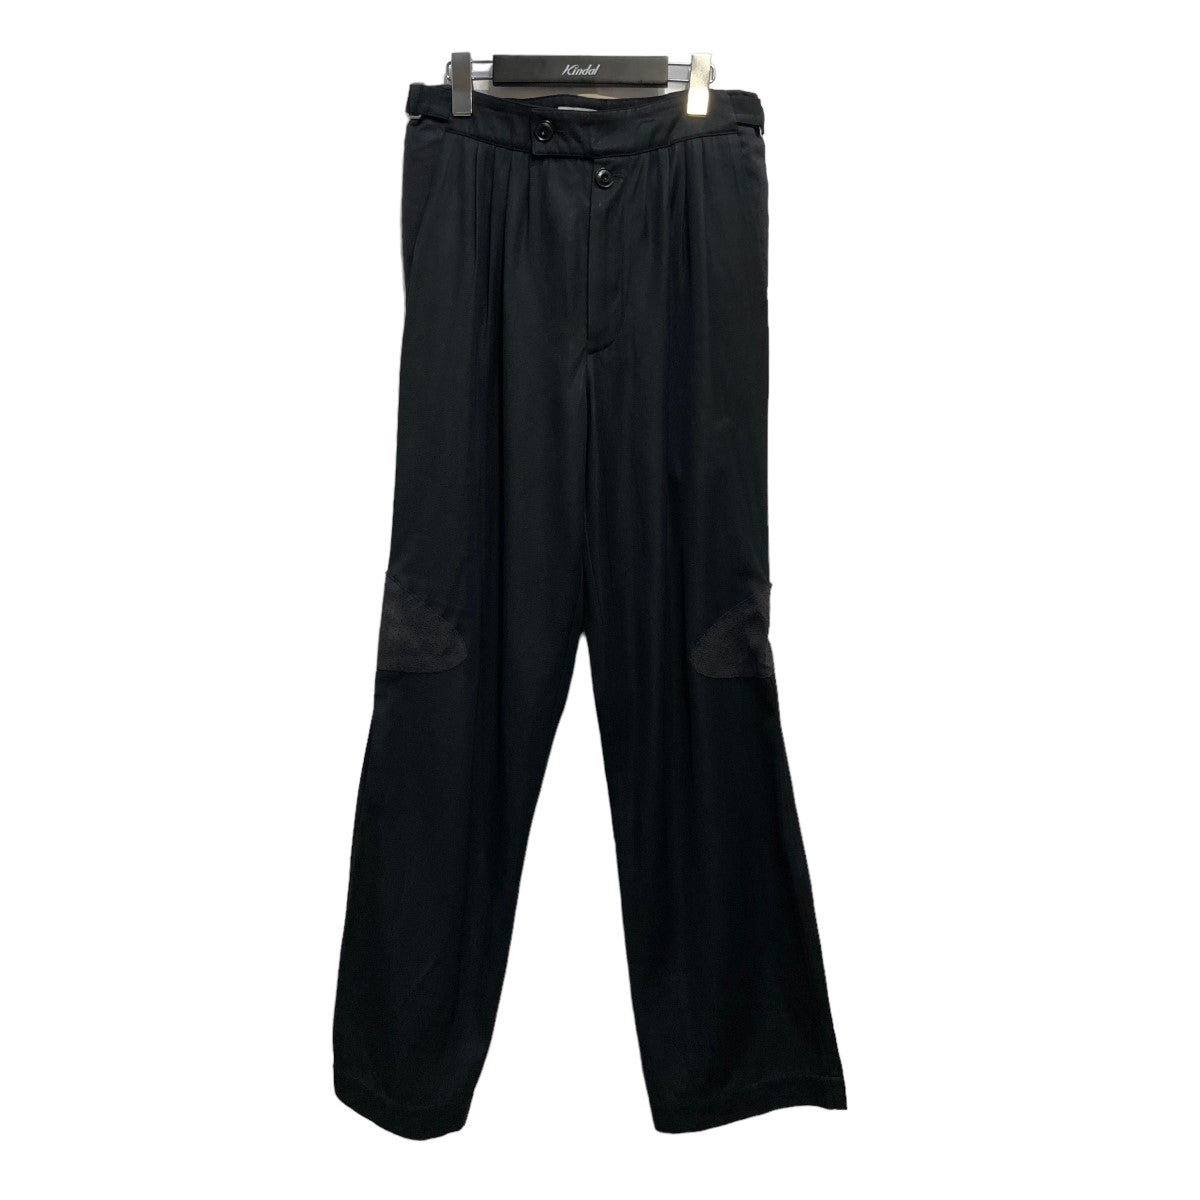 36,100円kiko kostadinov 20aw latch zip trousers